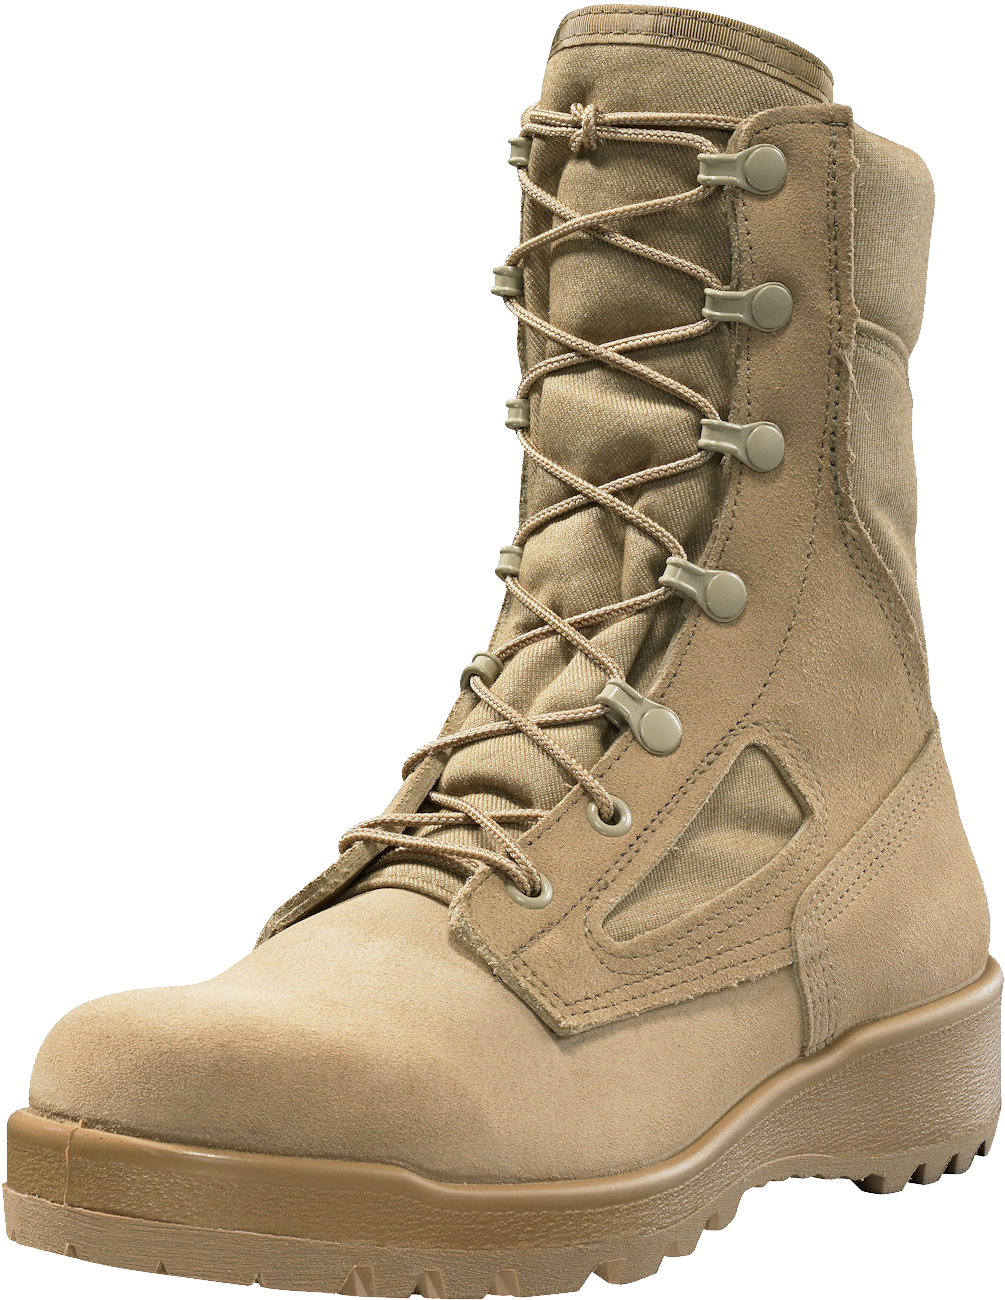 Desert Tan Combat Boots PNG Image